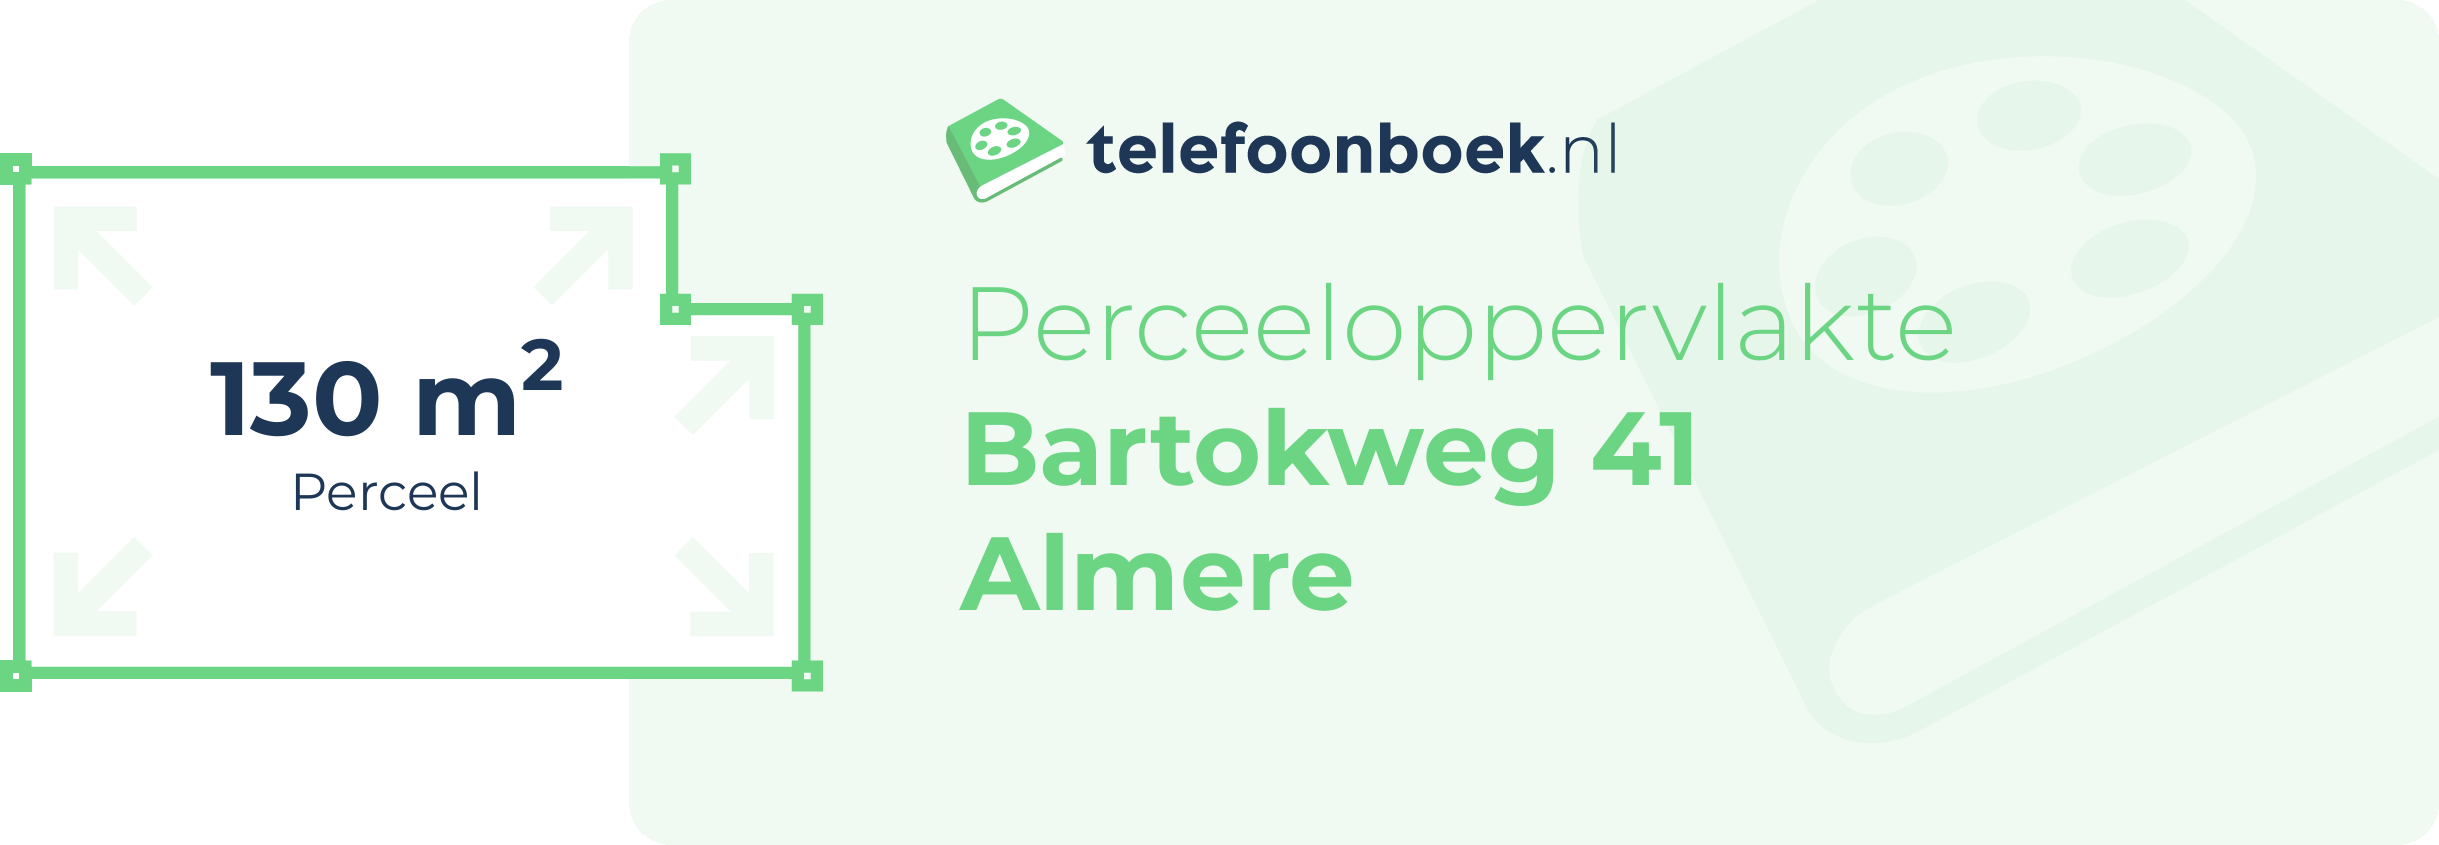 Perceeloppervlakte Bartokweg 41 Almere